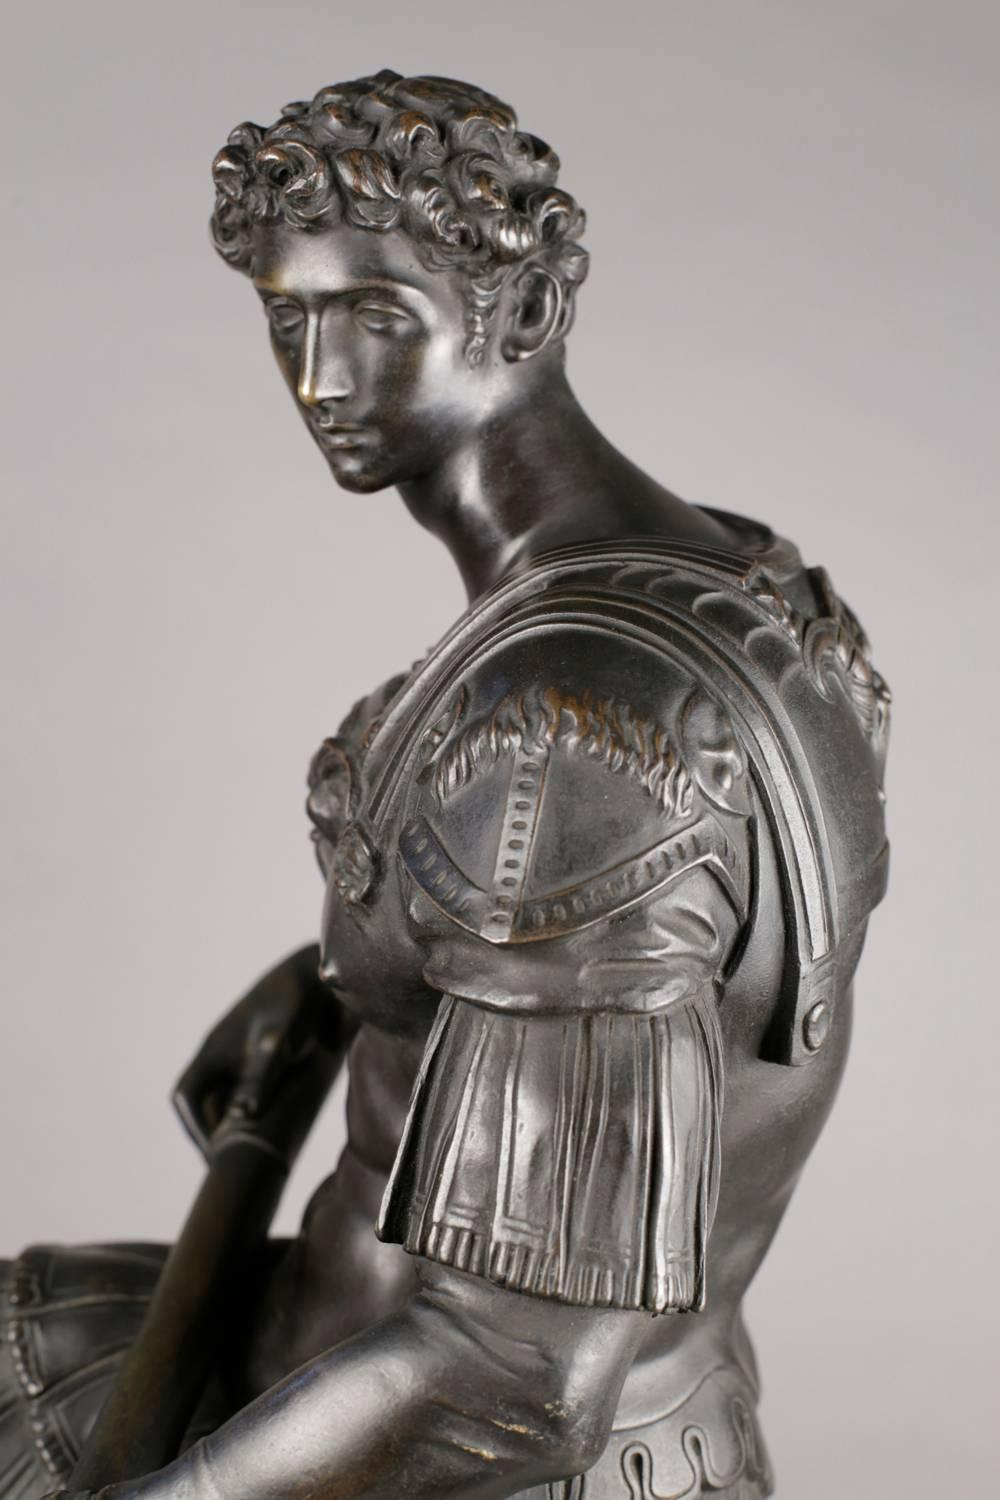 French or Italian Bronze figure of Giuliano de Medici after Michelangelo - Renaissance Sculpture by Michelangelo Buonarroti